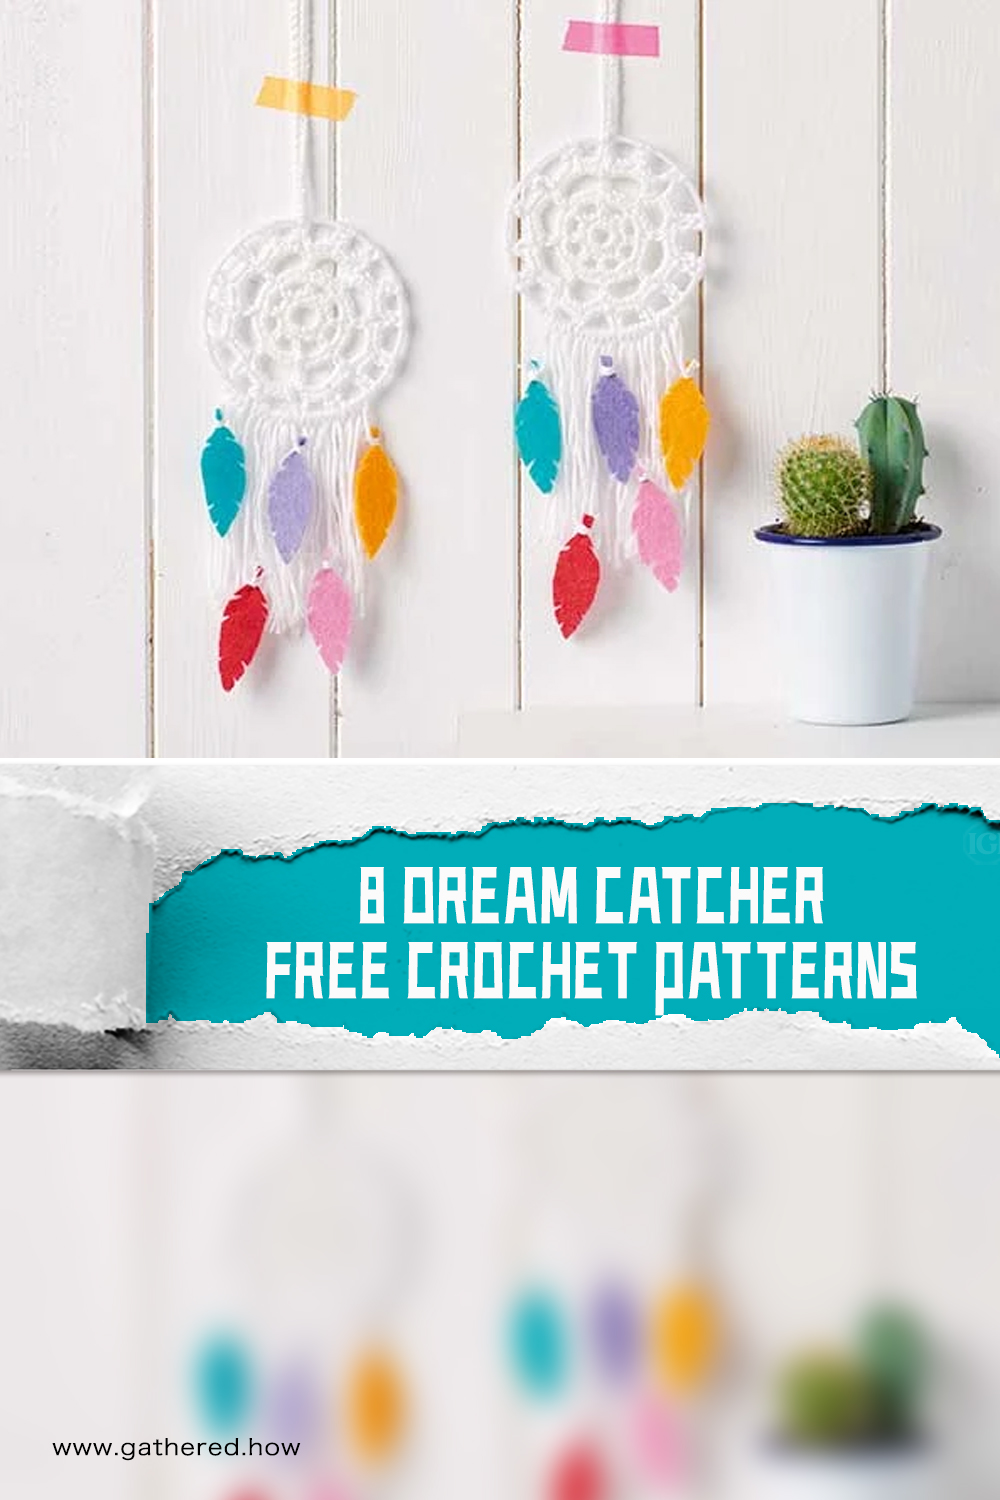 8 FREE Dream Catcher Crochet Patterns